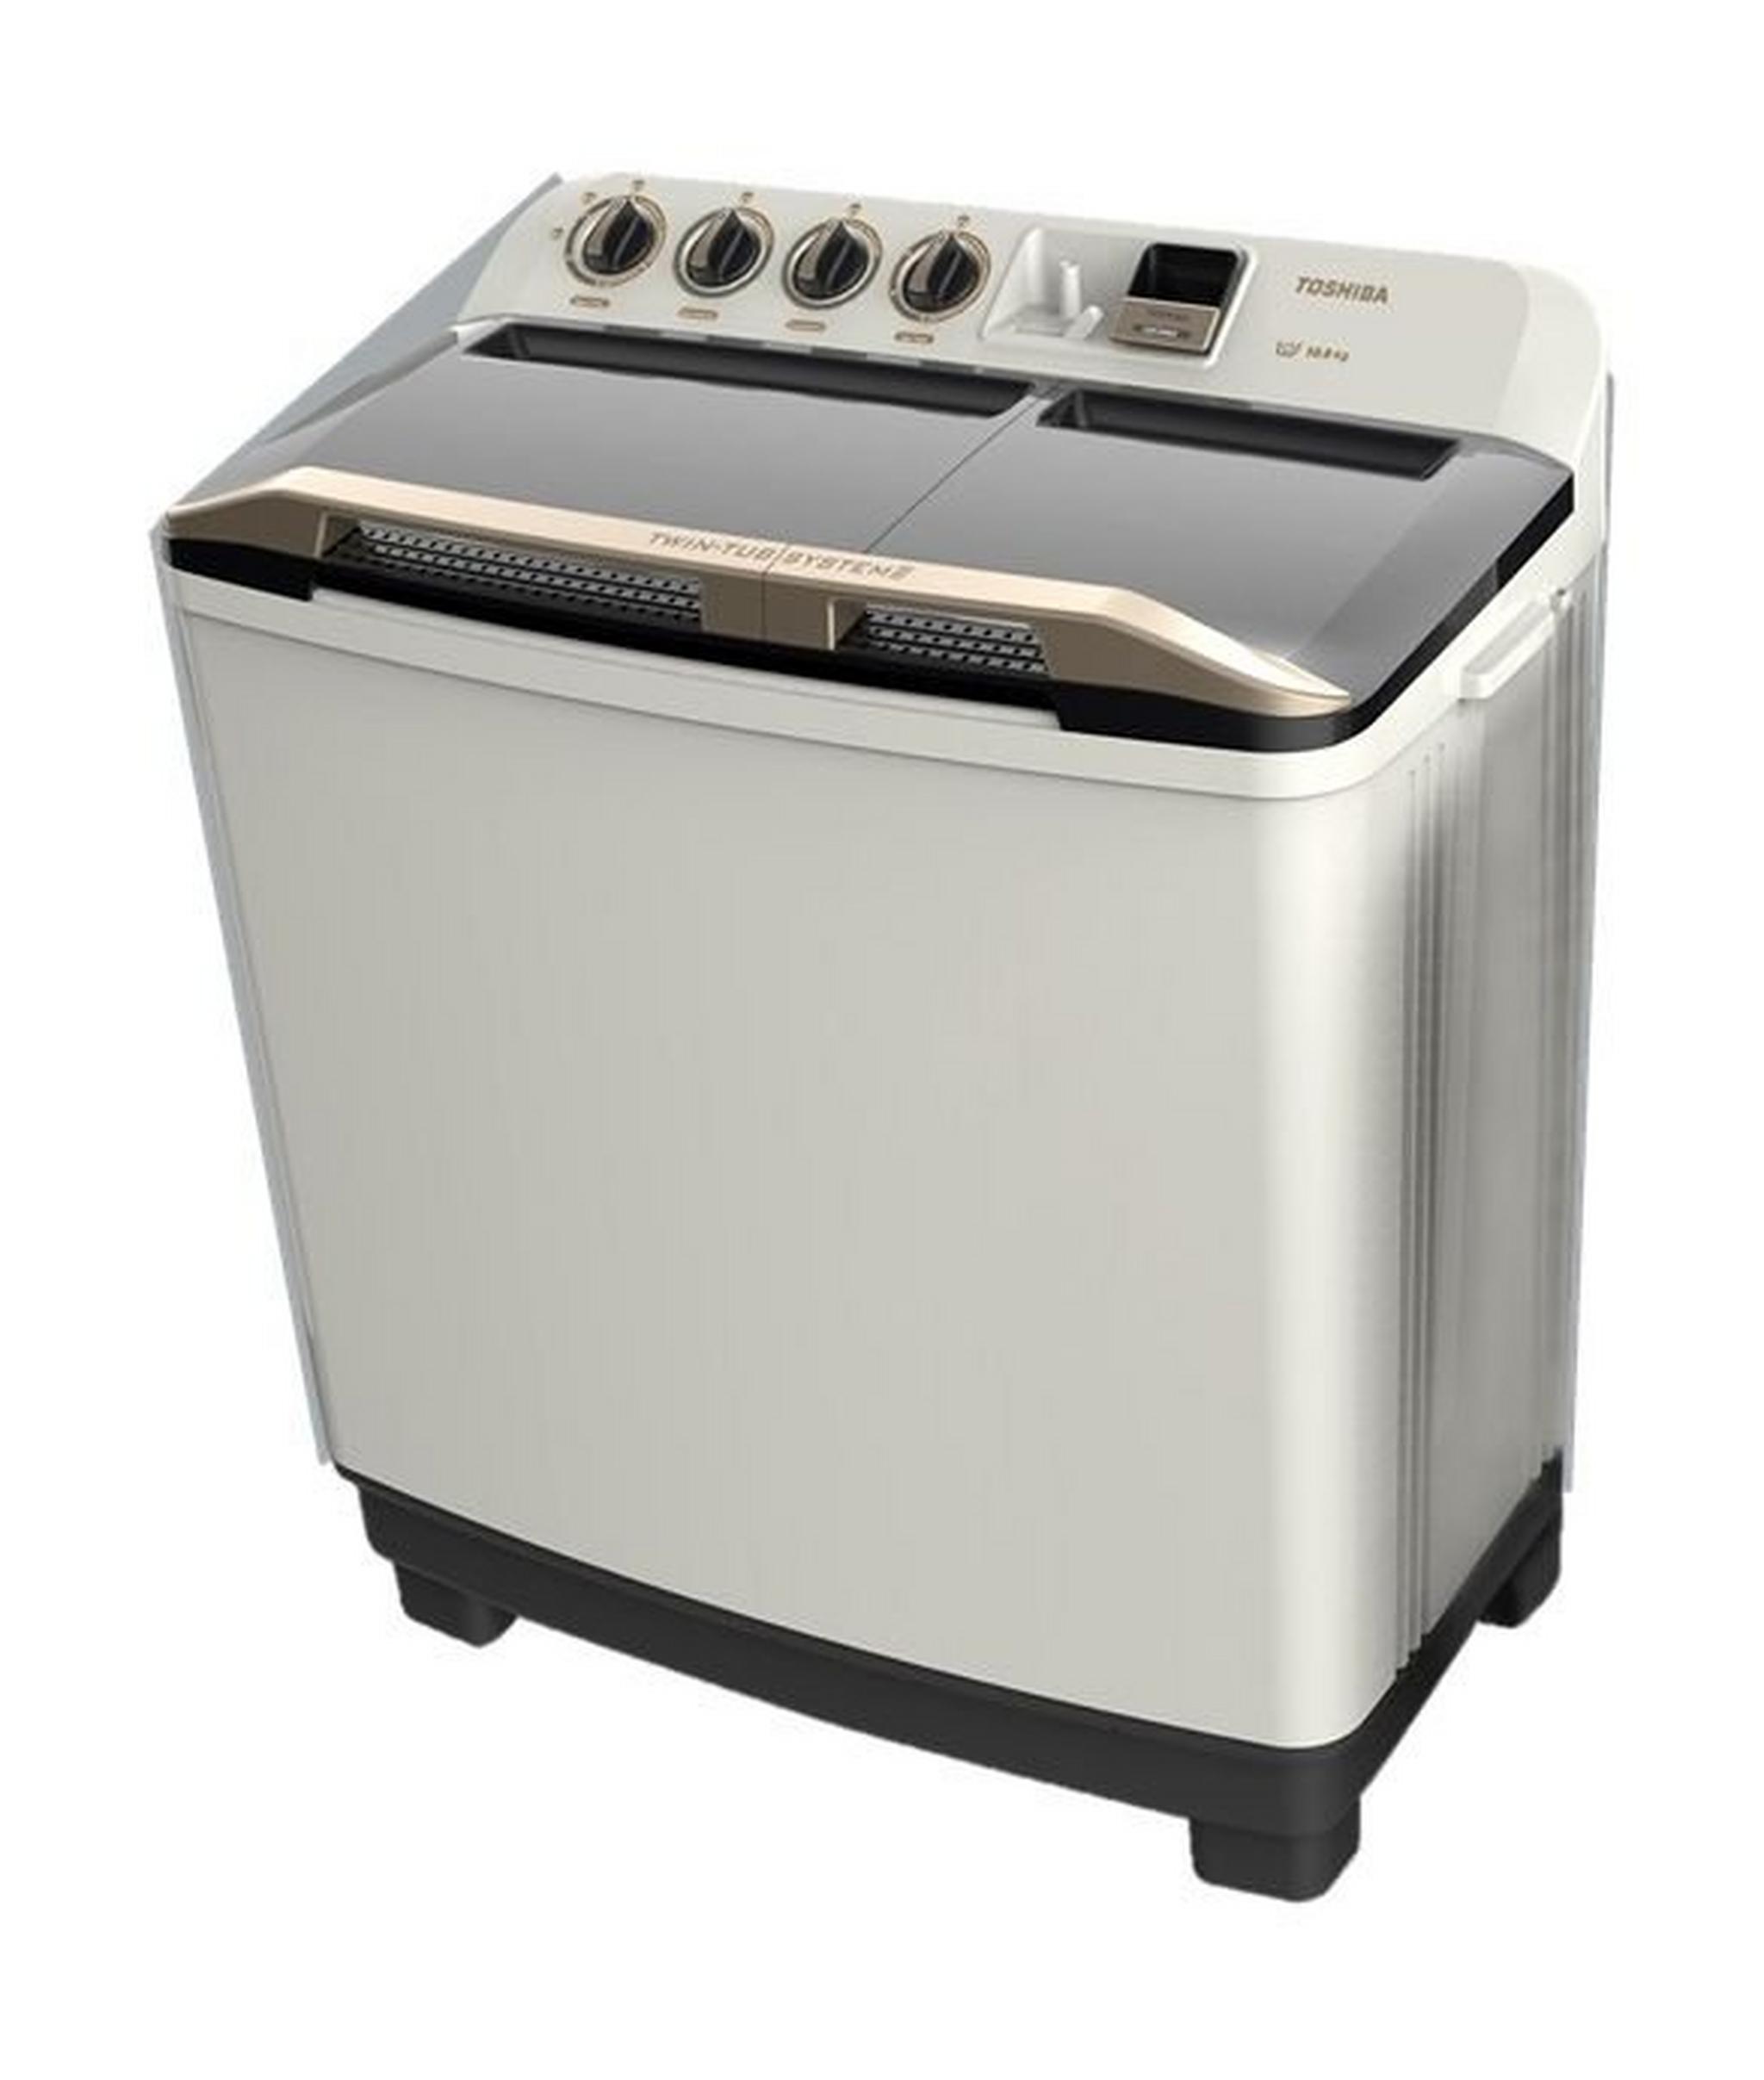 Toshiba Twin Tub Washer, 10kg Washing Capacity, 4.6kg Drying Capacity, VH-H110WB - White/Grey